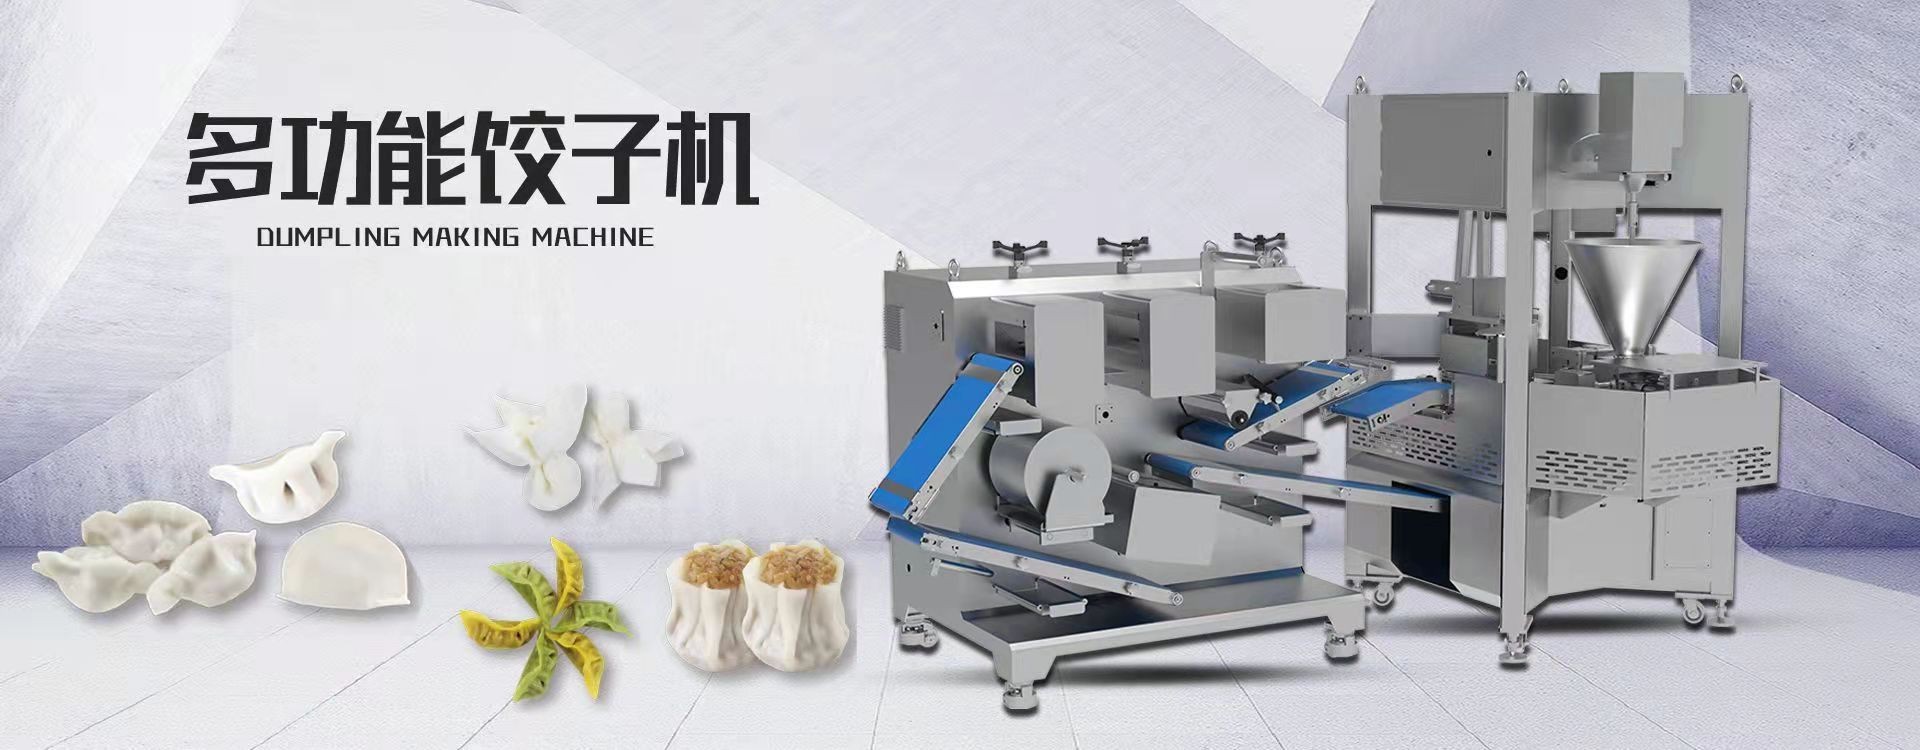 Jiuxu Machinery Co., Ltd.